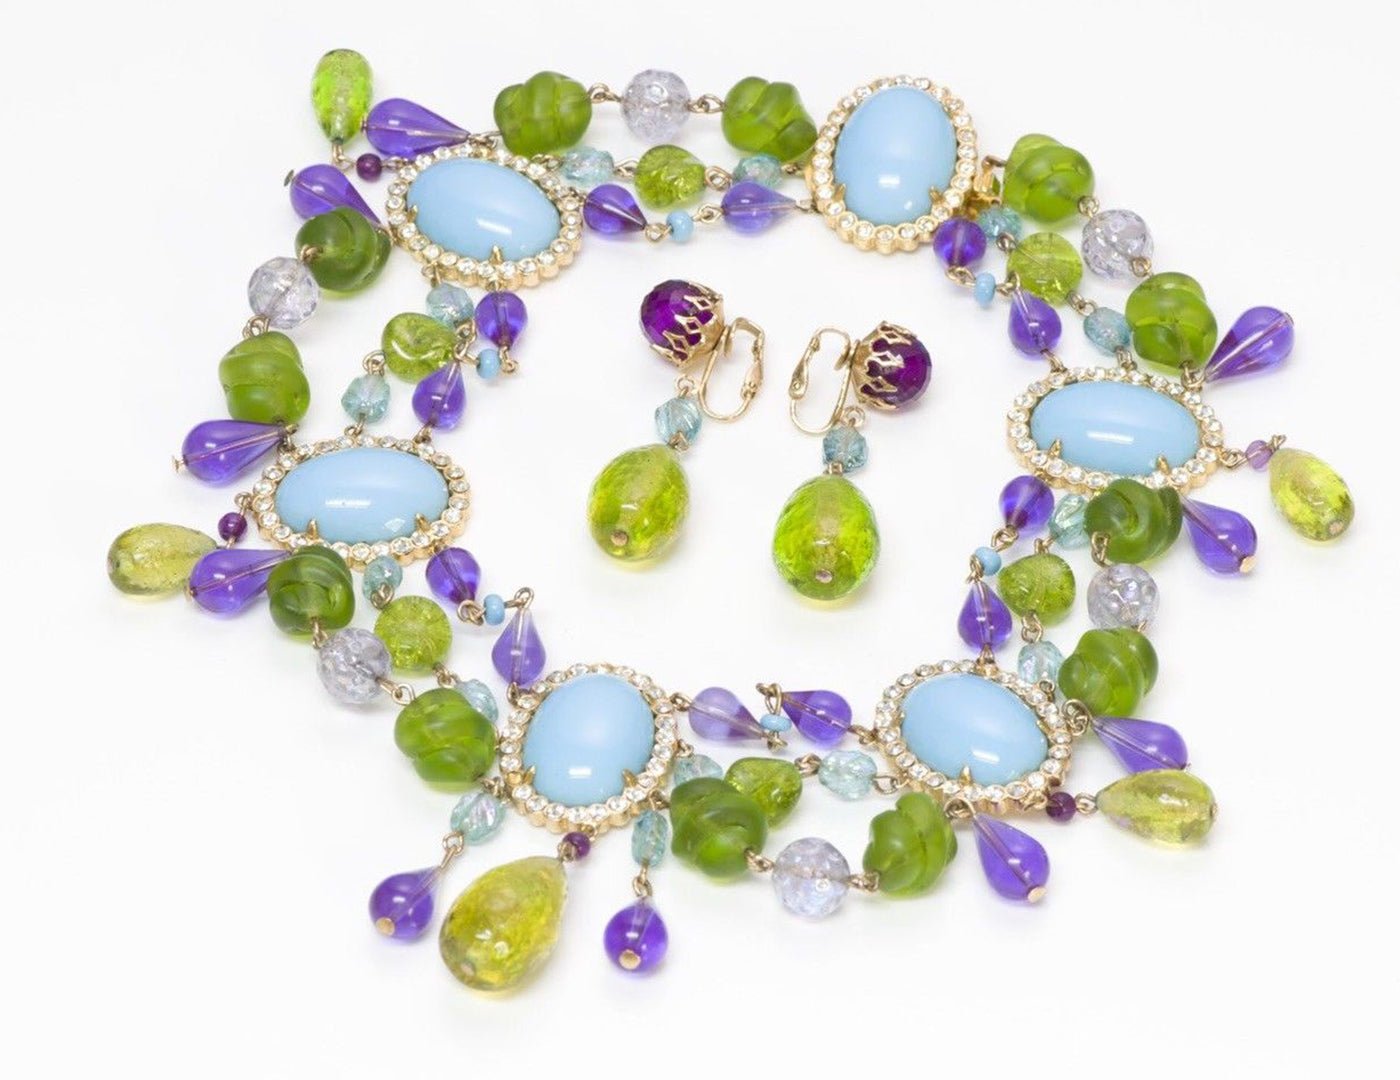 Maison Gripoix Faux Turquoise Poured Glass Necklace Earrings